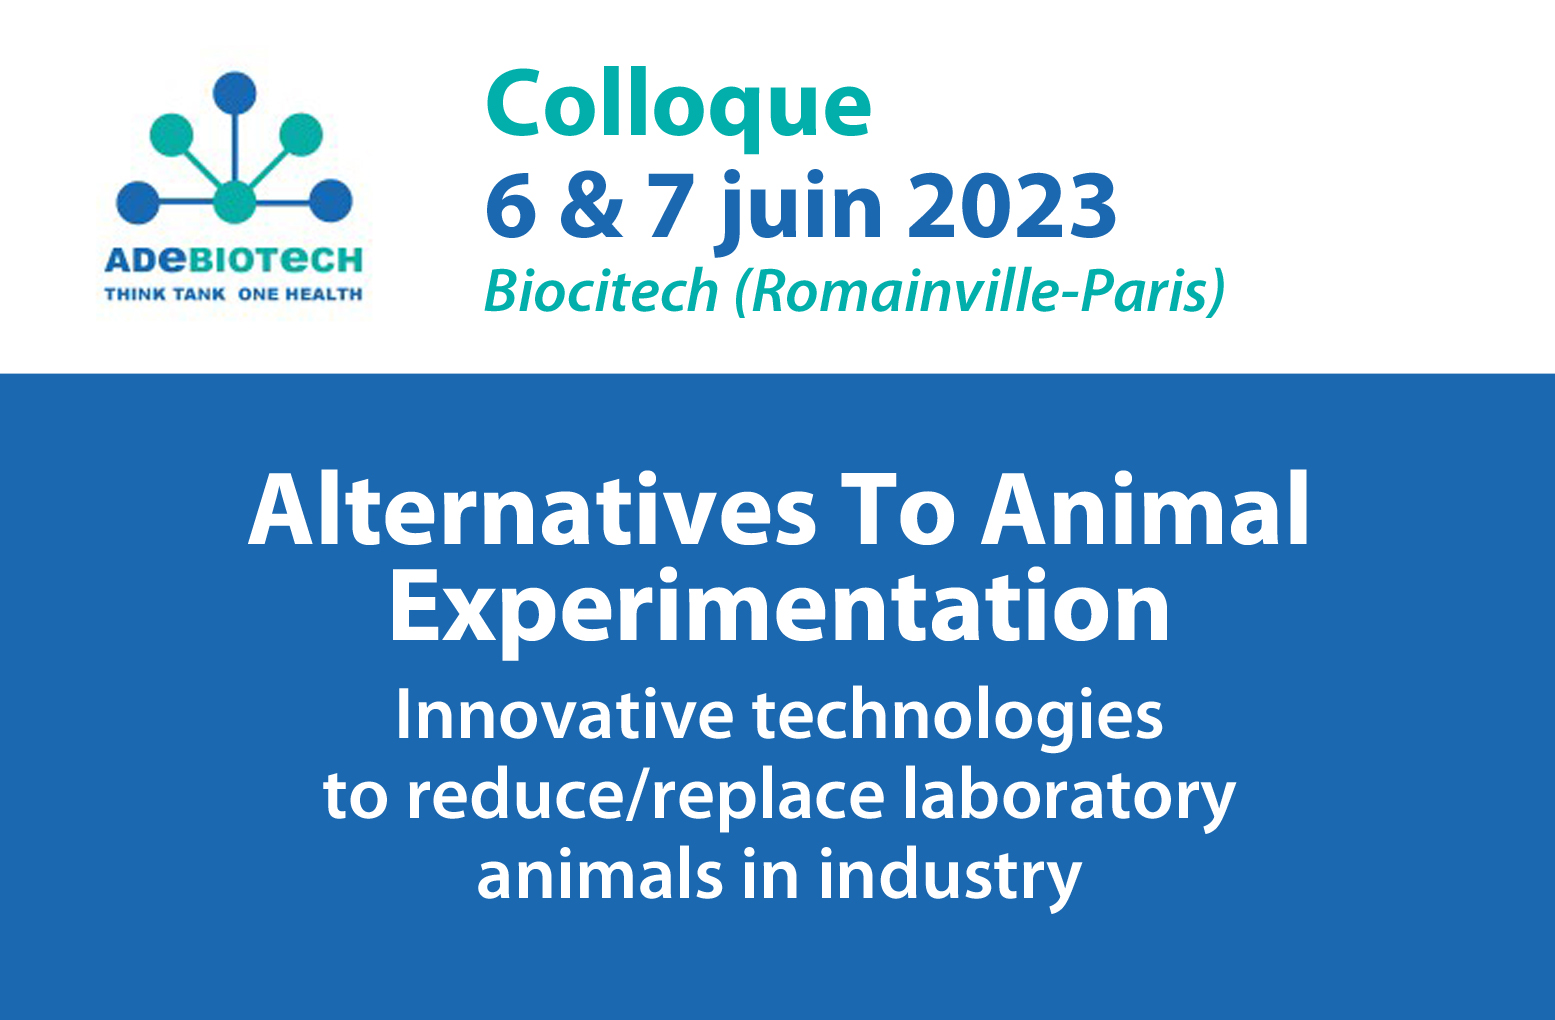 Colloque Adebiotech – Alternatives To Animal Experimentation – 6 & 7 juin 2023 – Biocitech (Romainville-Paris)